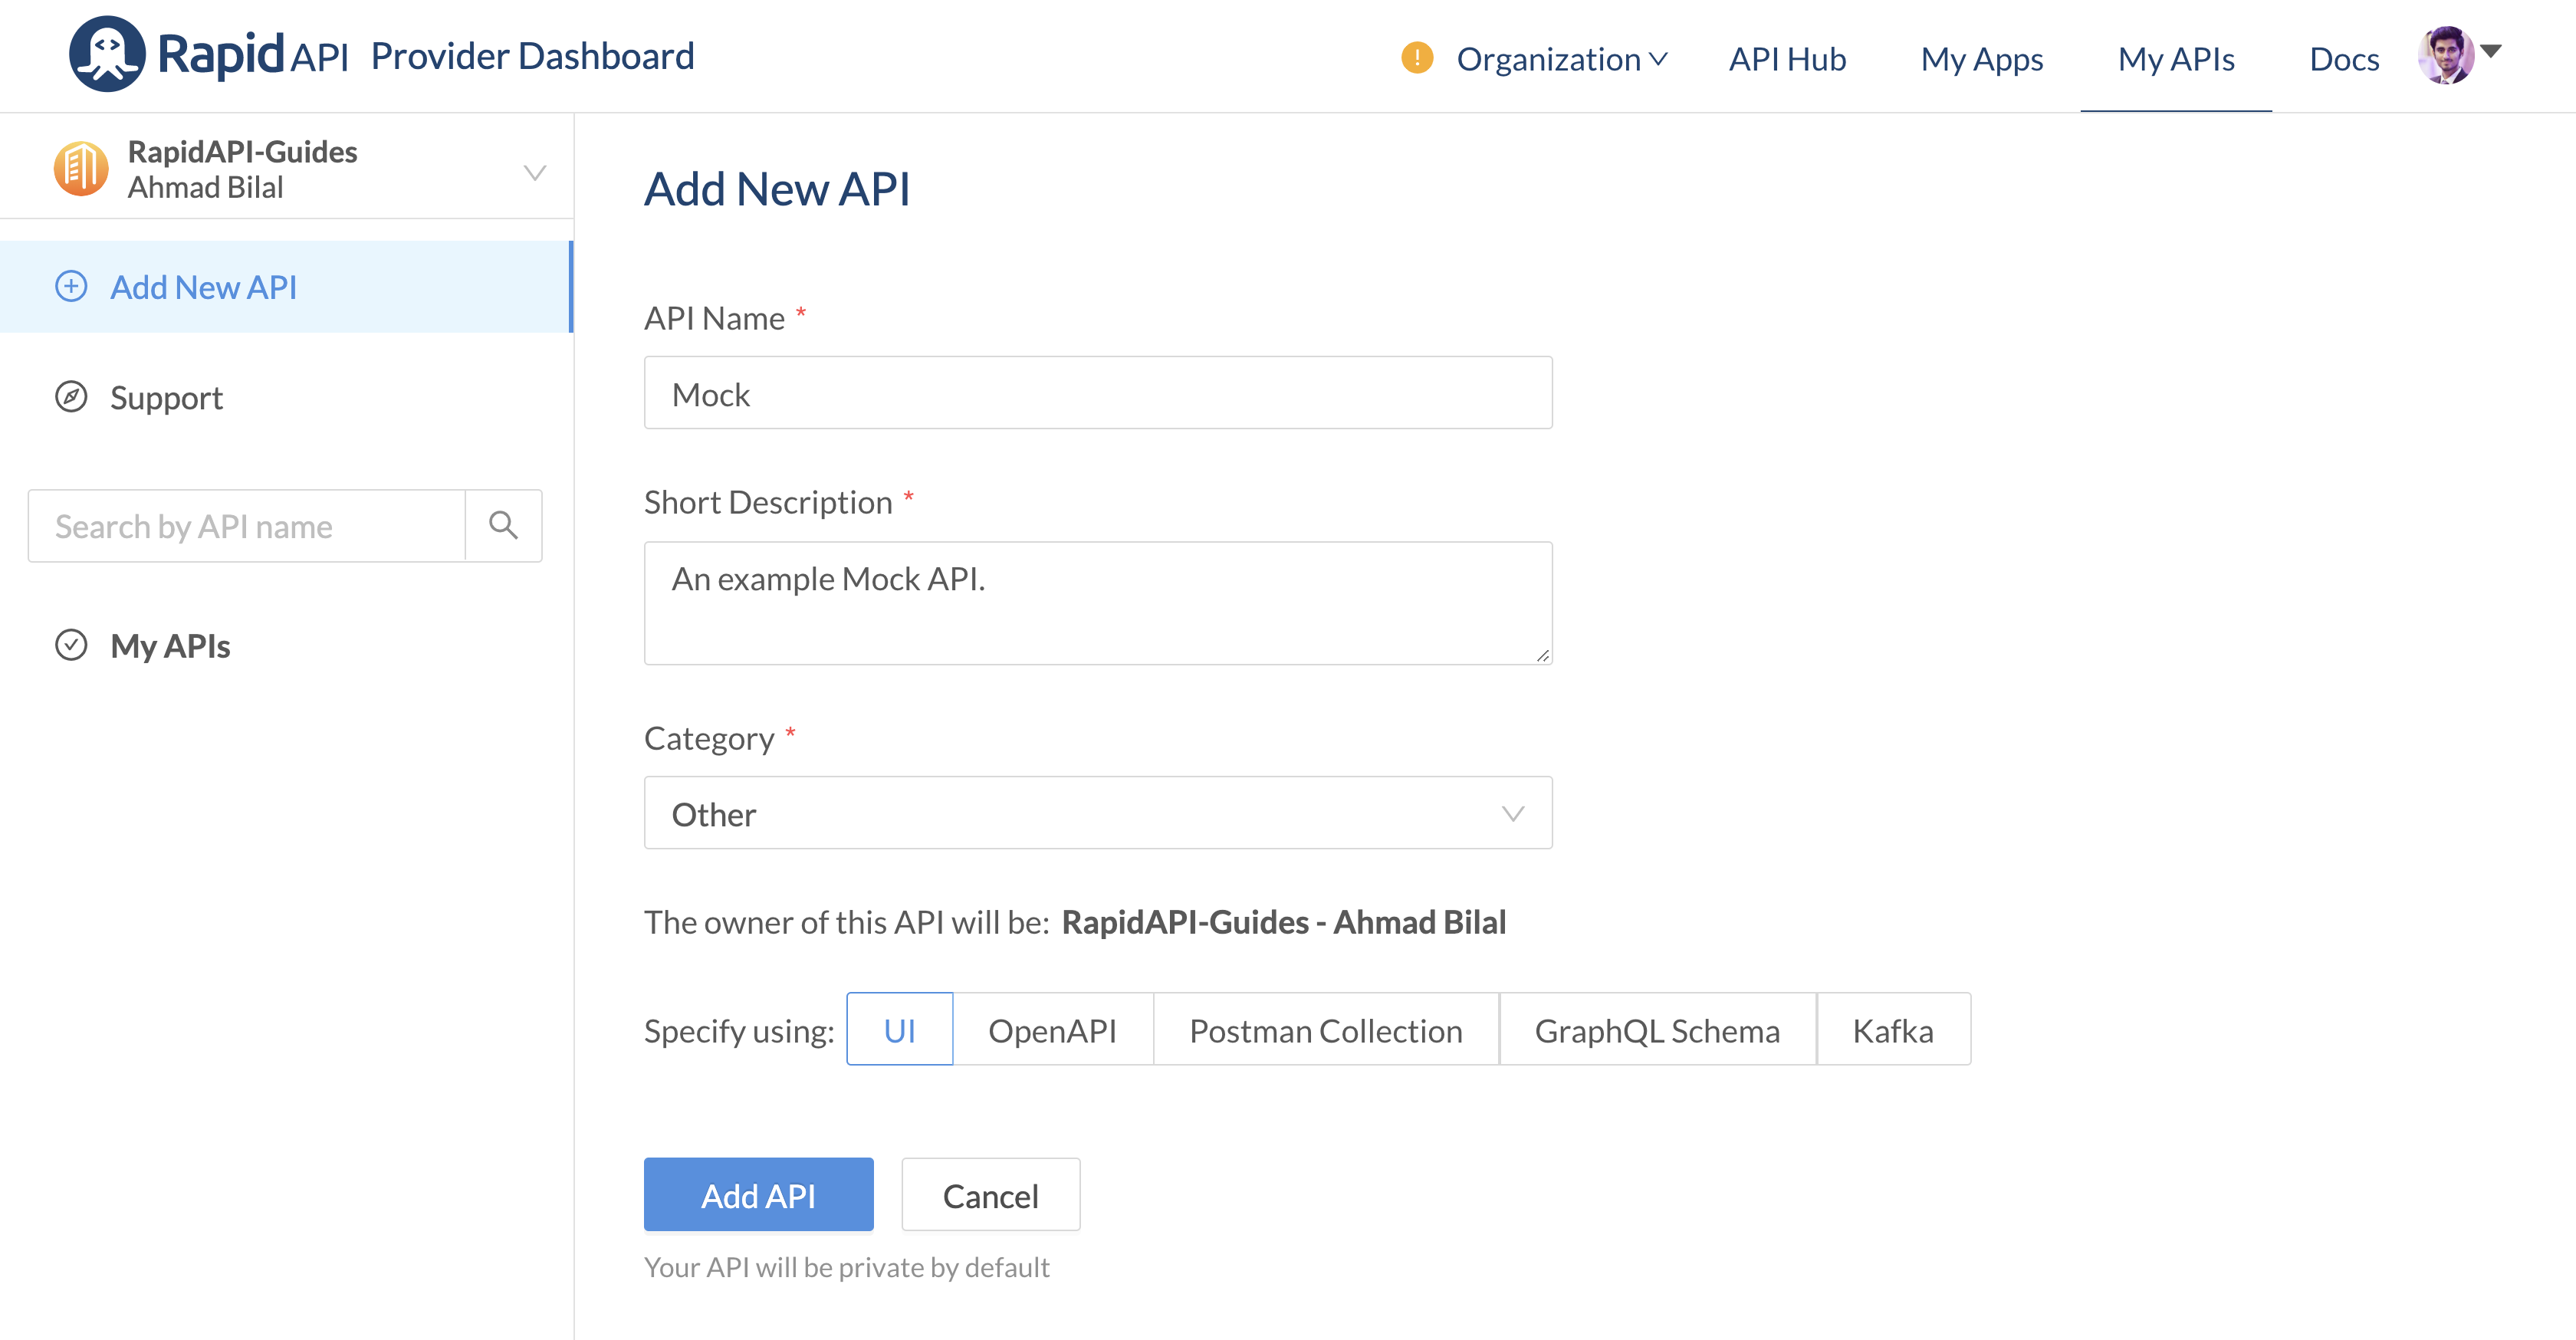 Add details of your Mock API